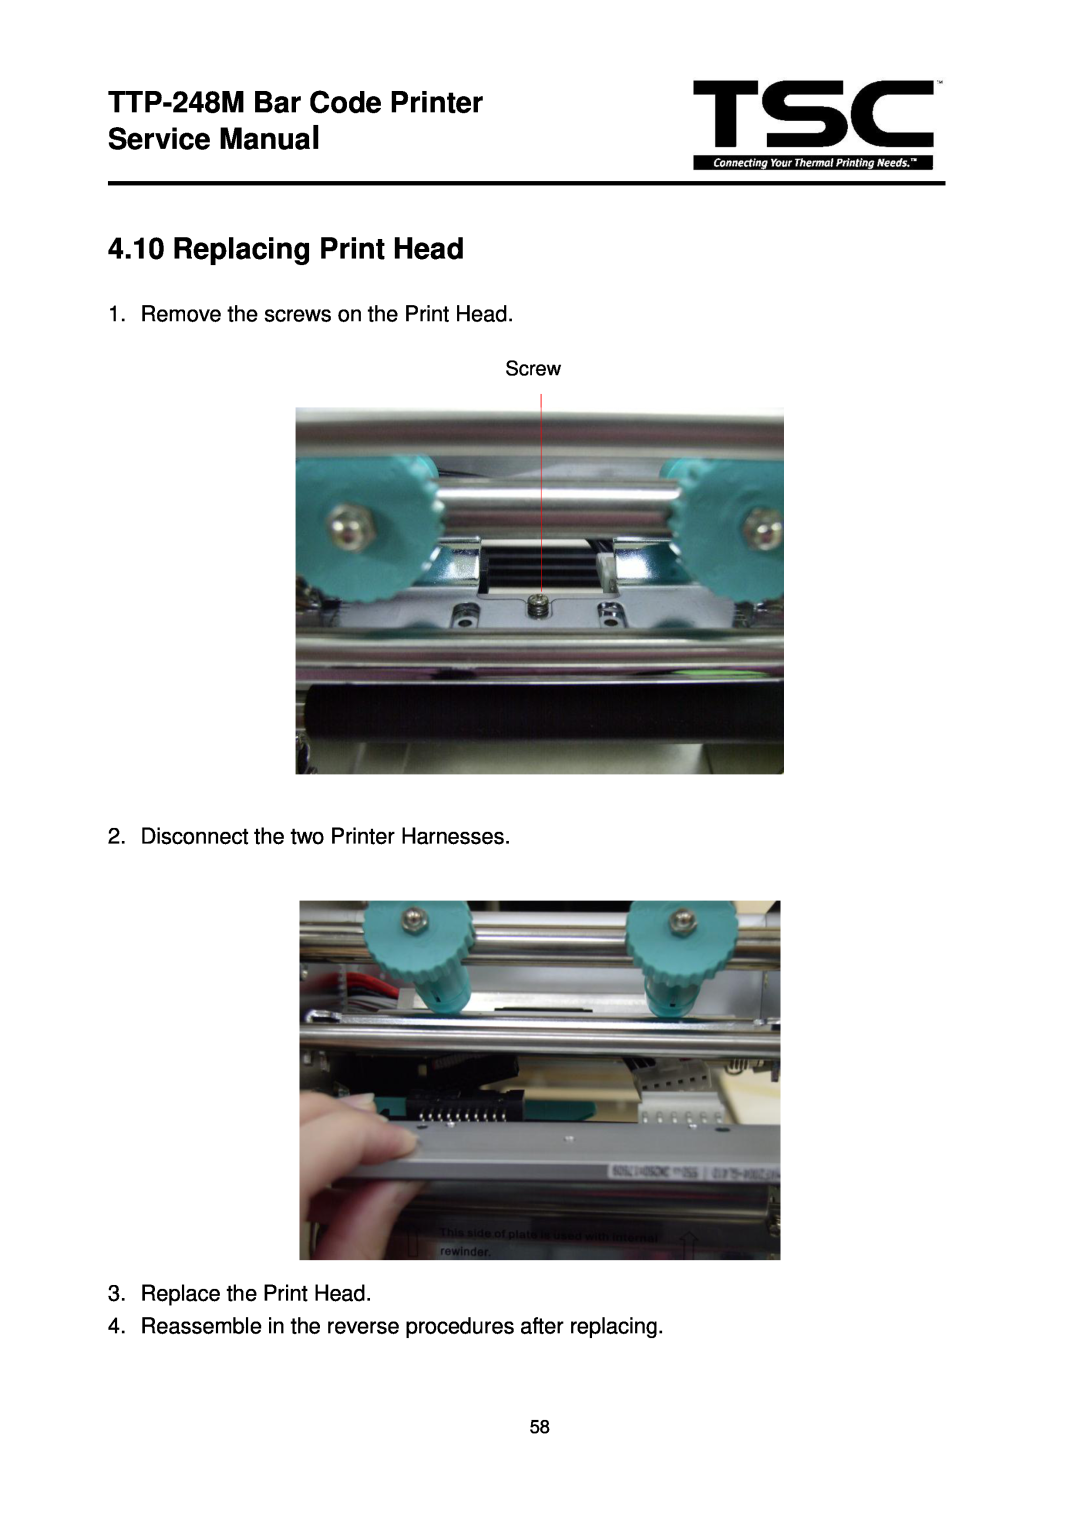 The Speaker Company TTP 248M service manual TTP-248M Bar Code Printer Service Manual 4.10 Replacing Print Head 